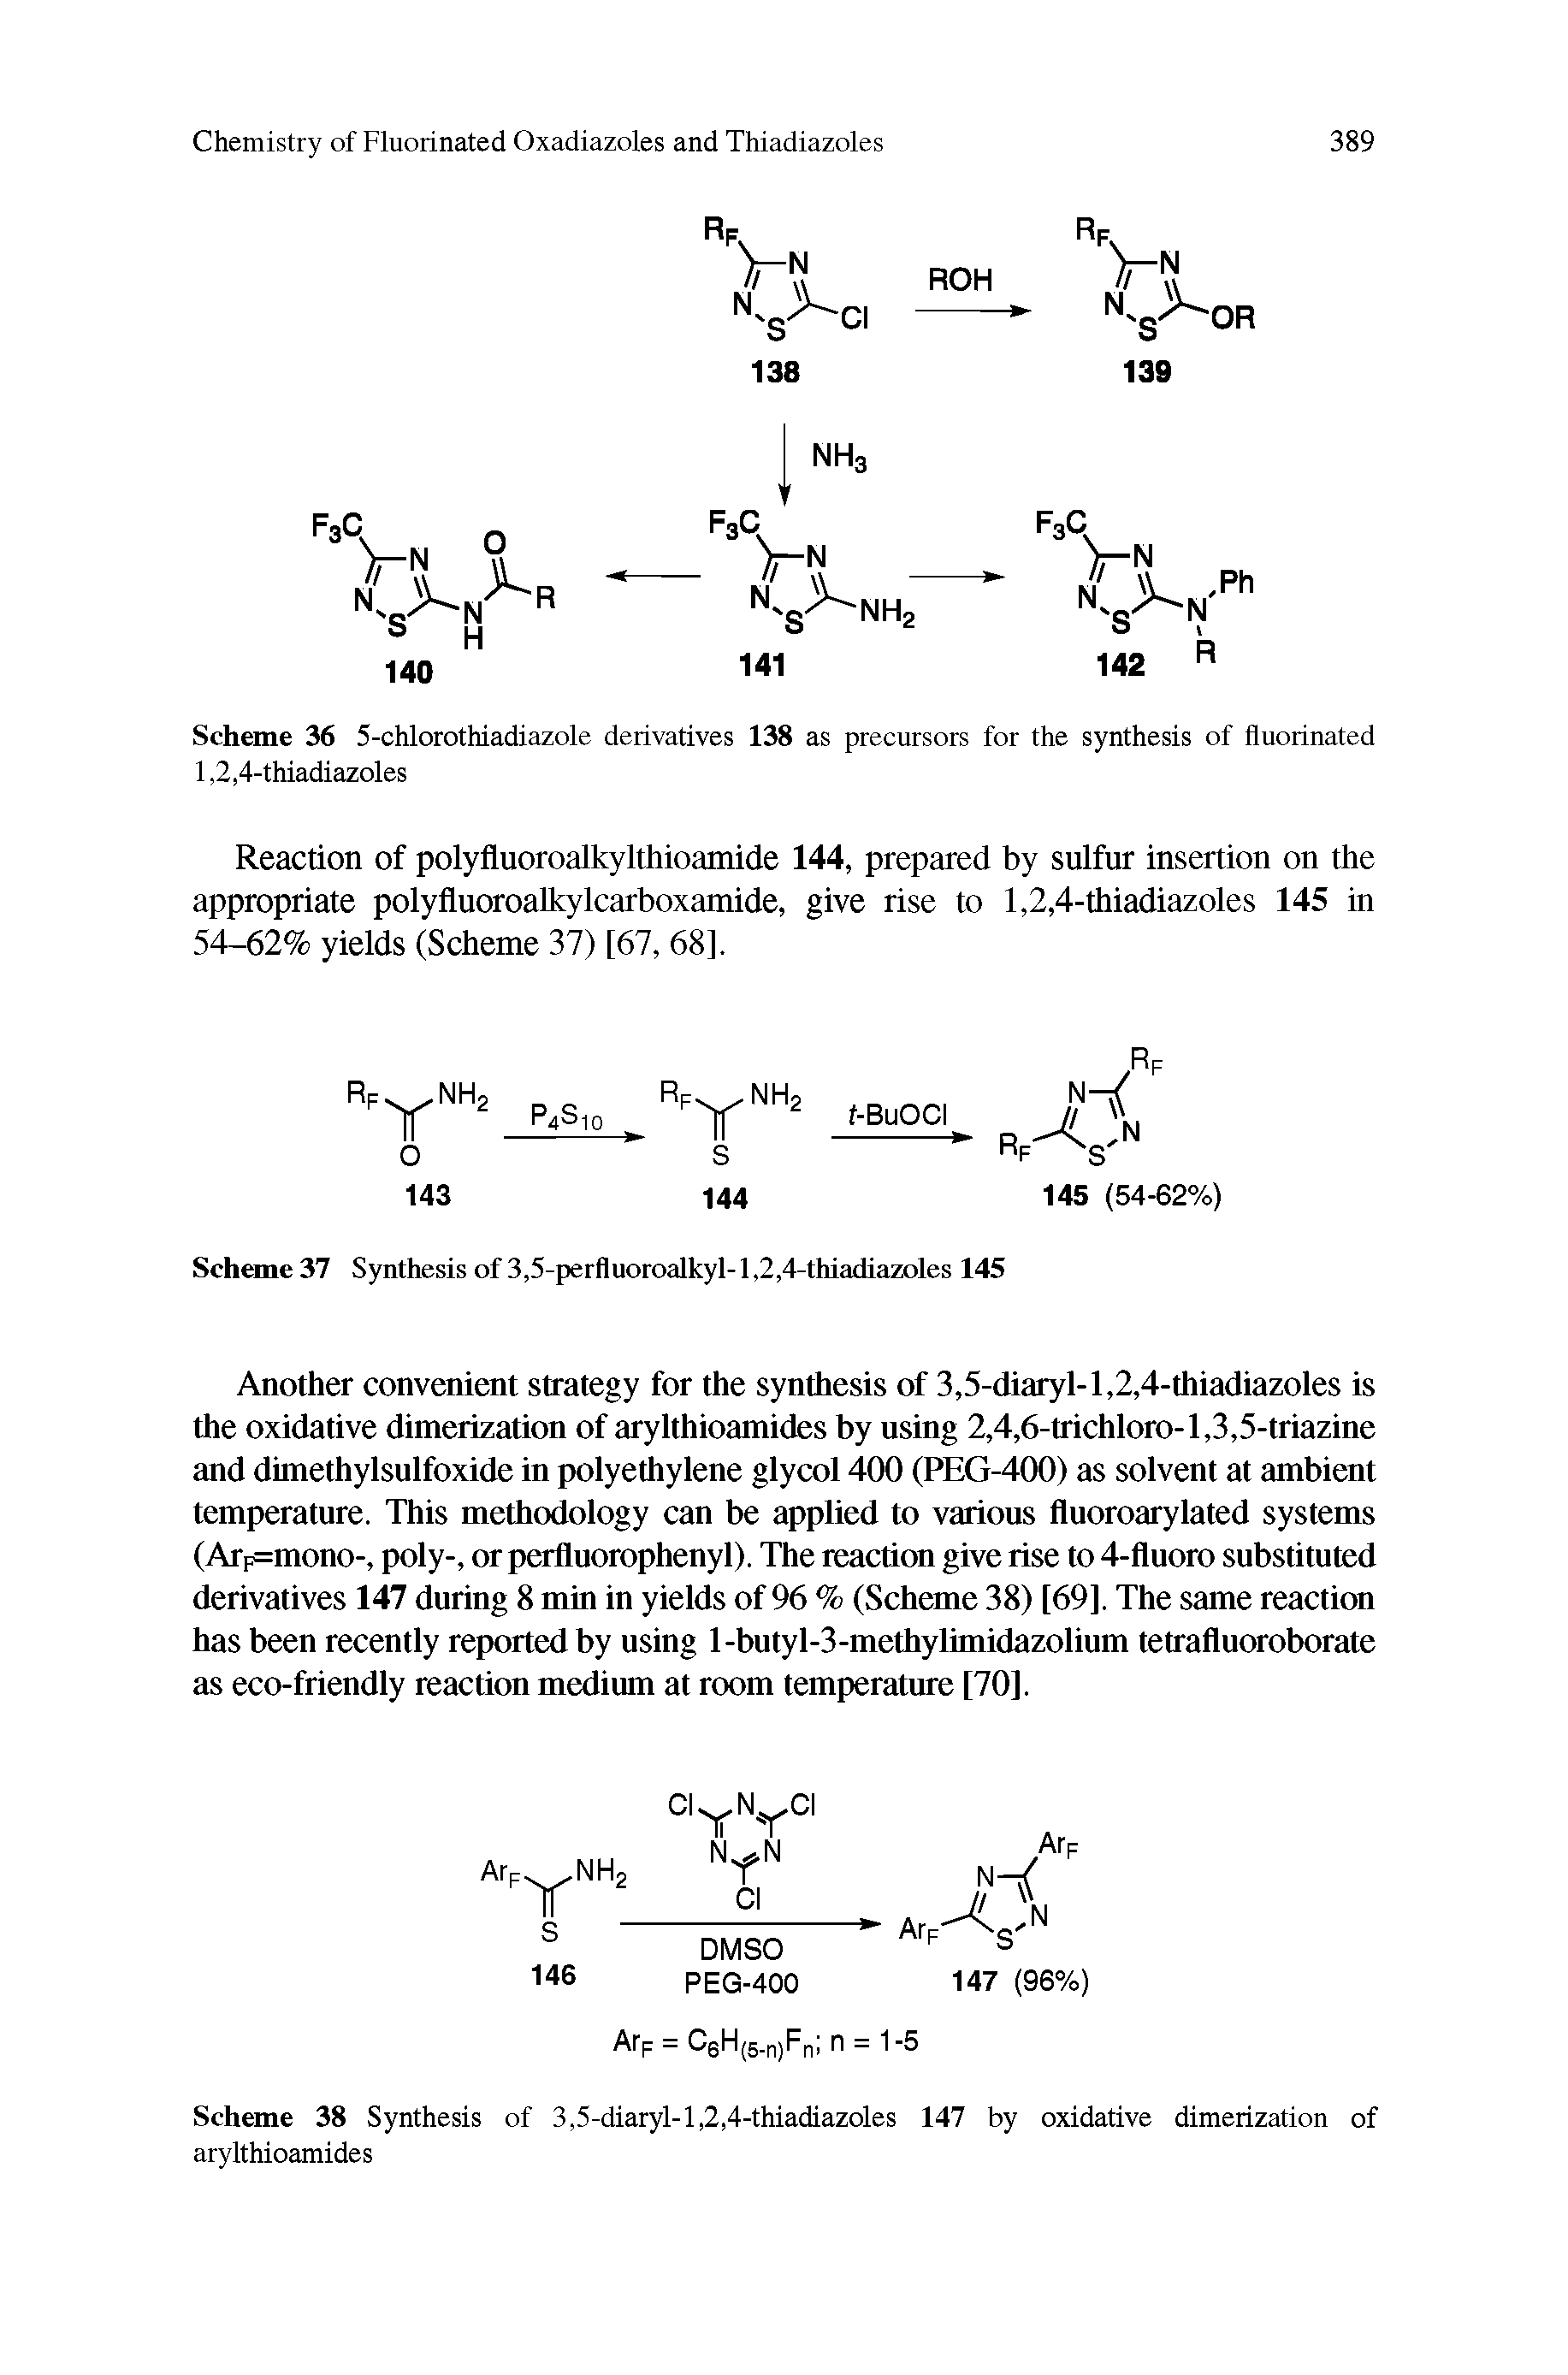 Scheme 38 Synthesis of 3,5-diaryl-1,2,4-thiadiazoles 147 by oxidative dimerization of arylthioamides...